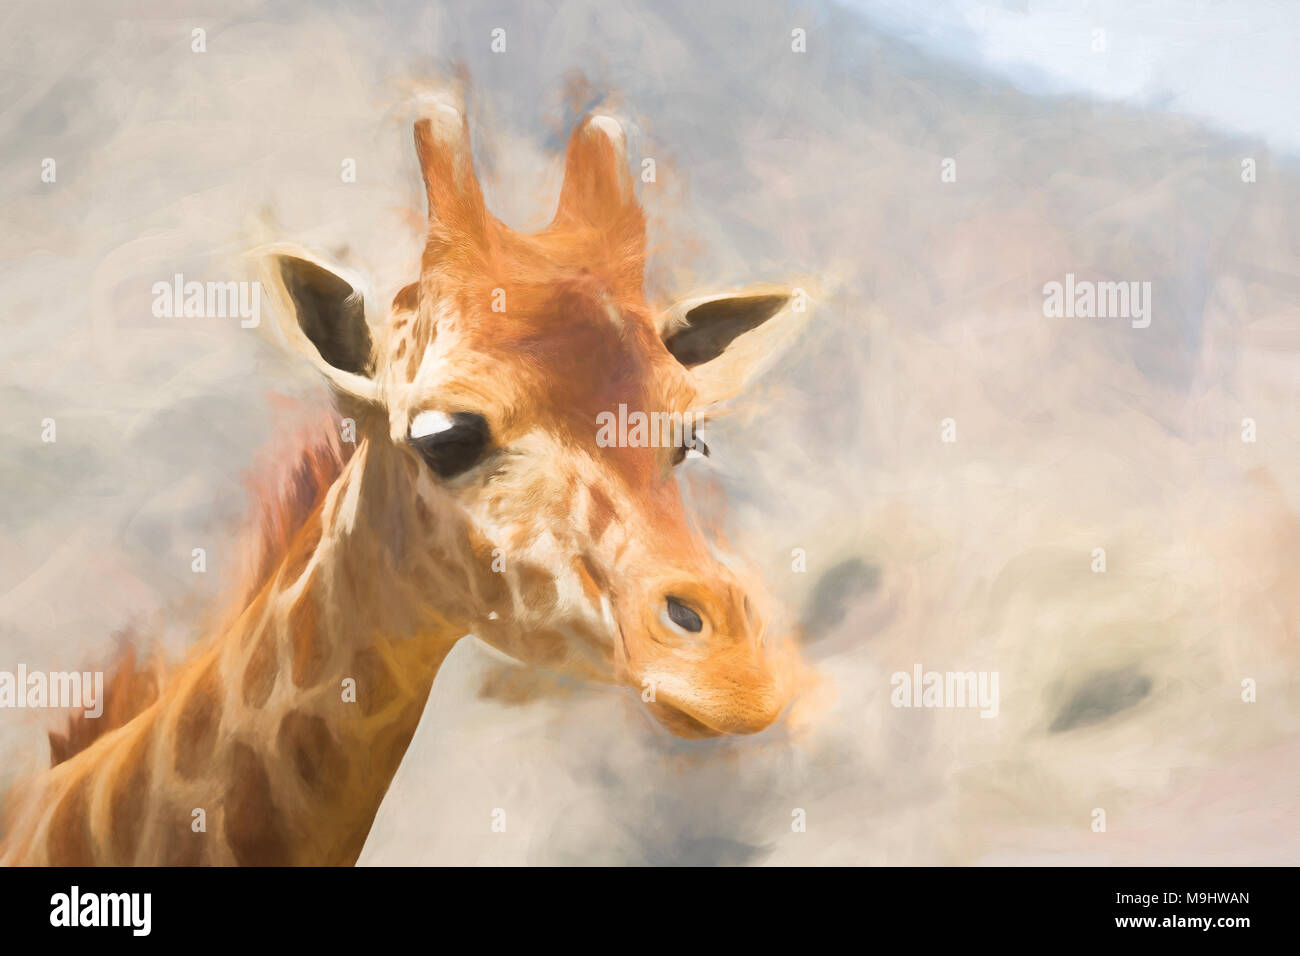 Girafe réticulée ou Somali - Giraffa camelopardalis reticulata spécimen en captivité. Banque D'Images